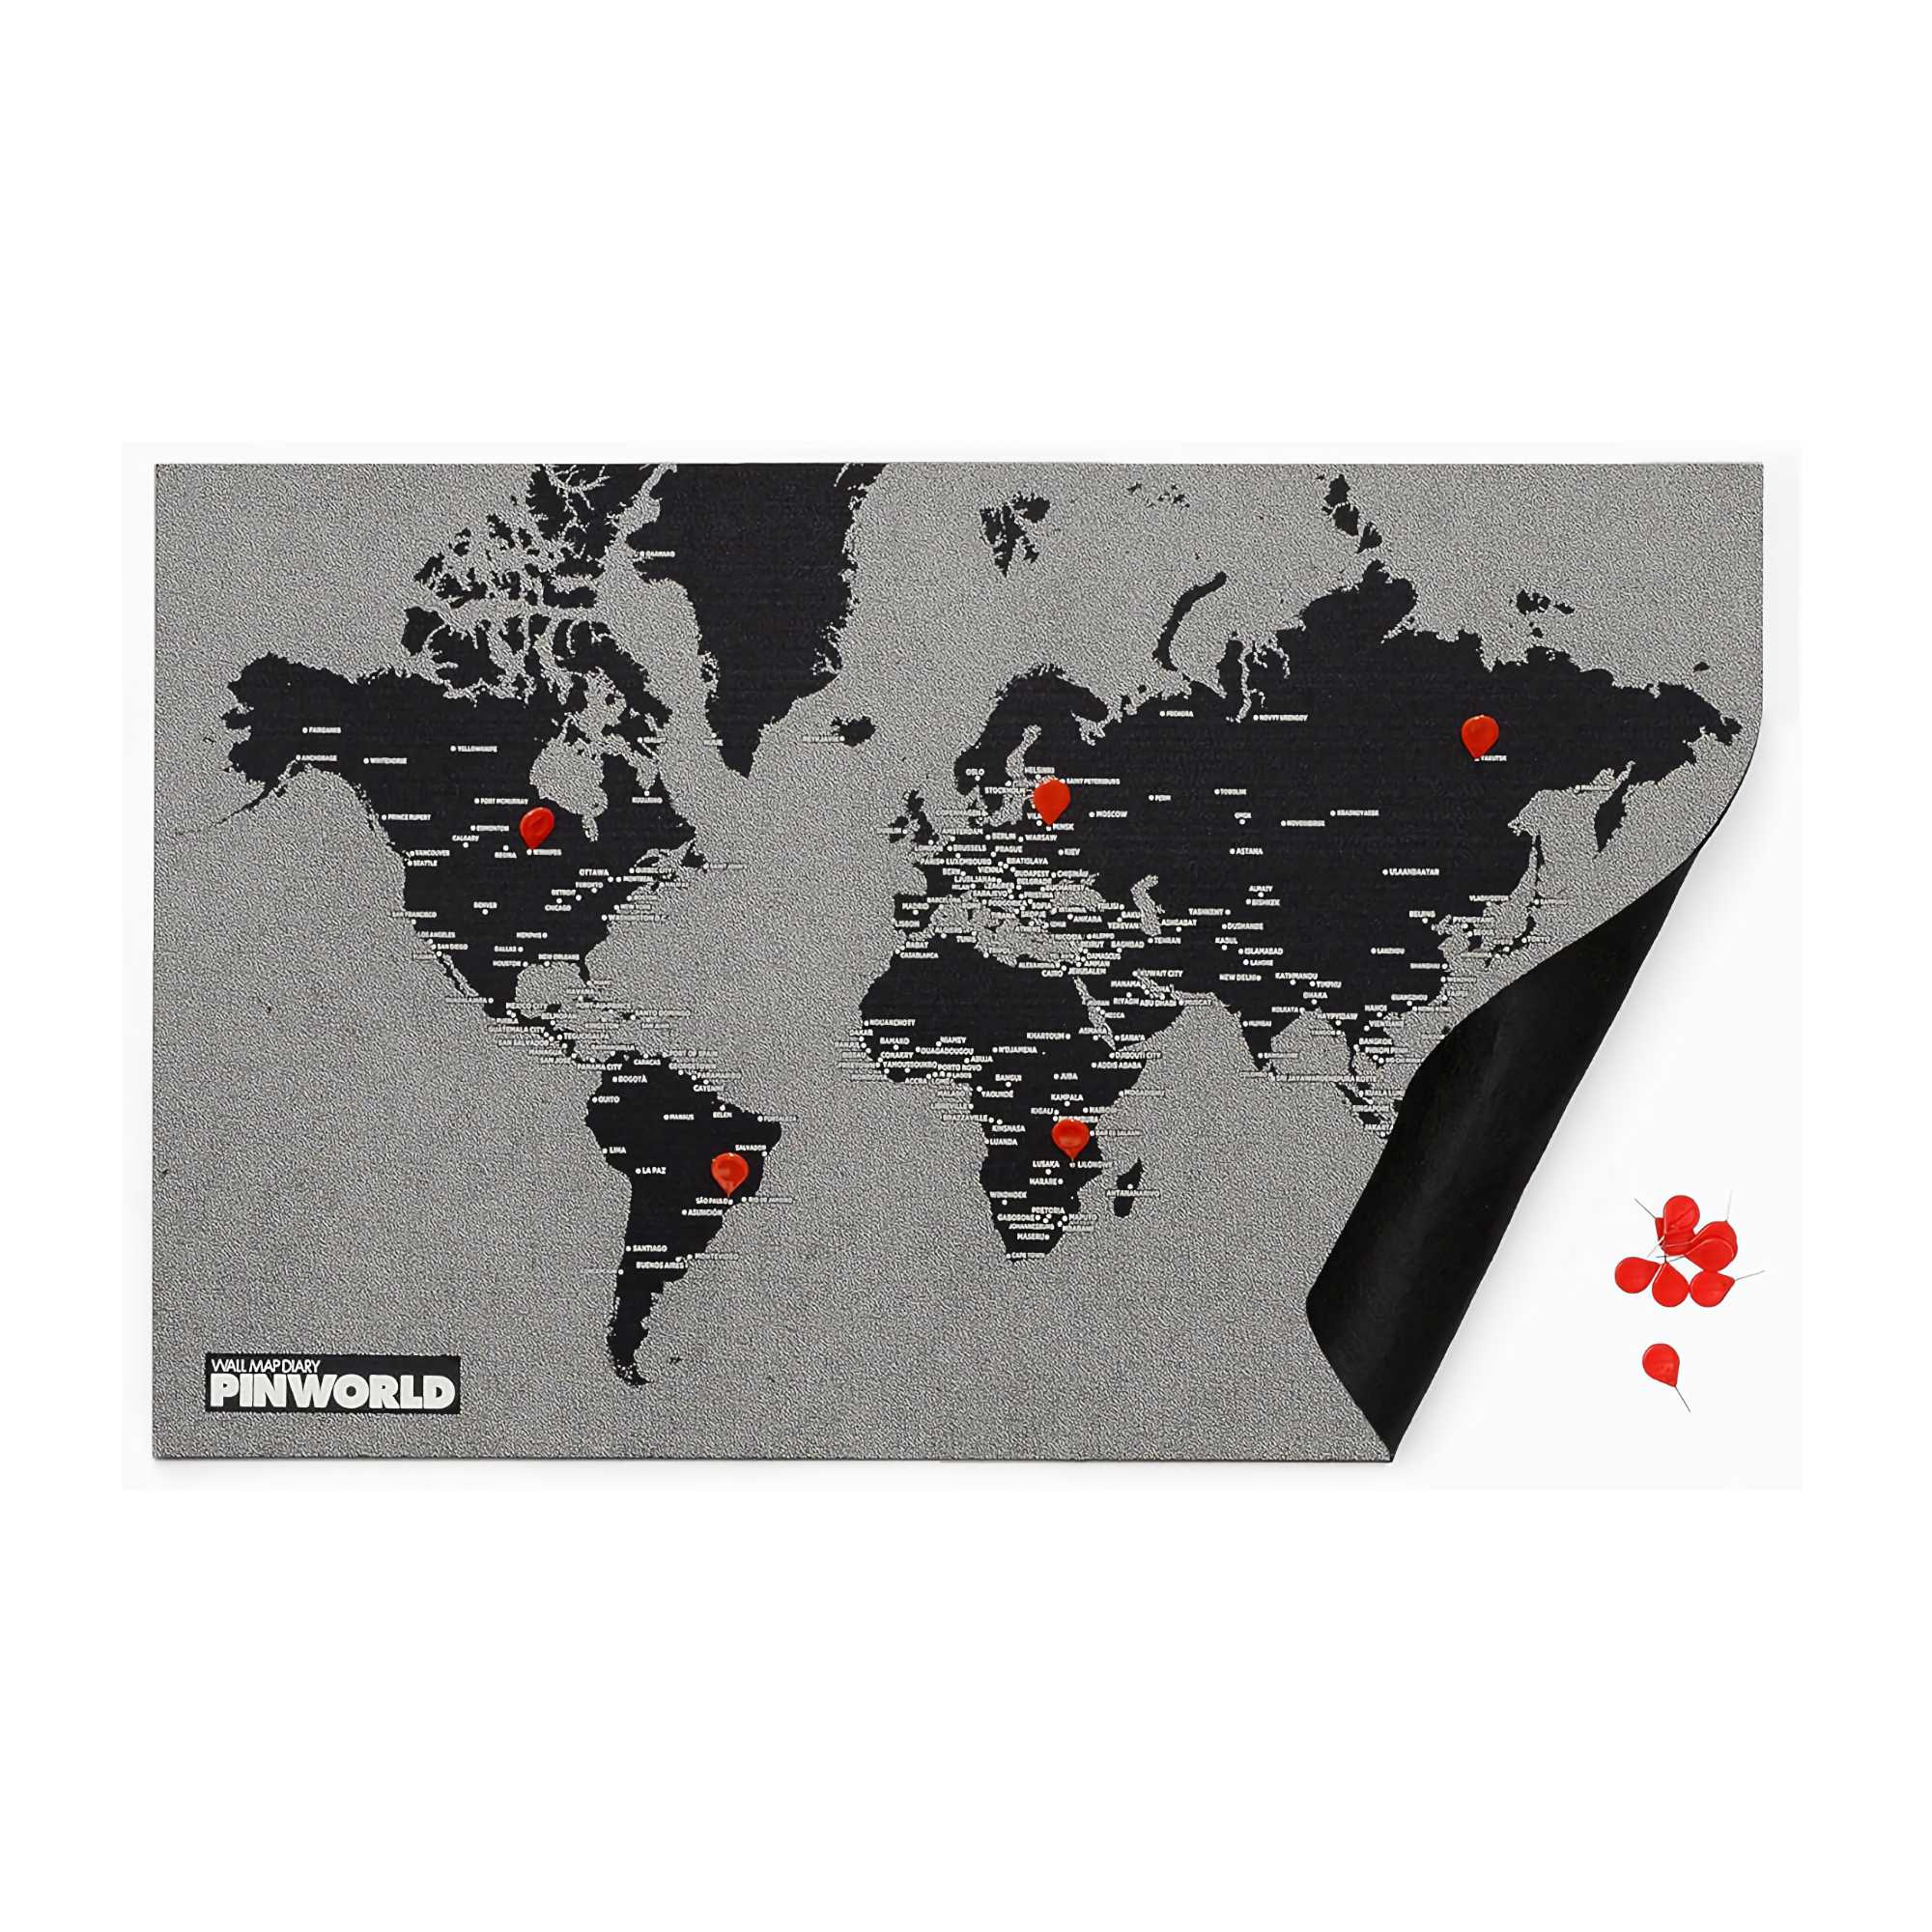 Palomar Pinworld by countries mini (77x48cm), black